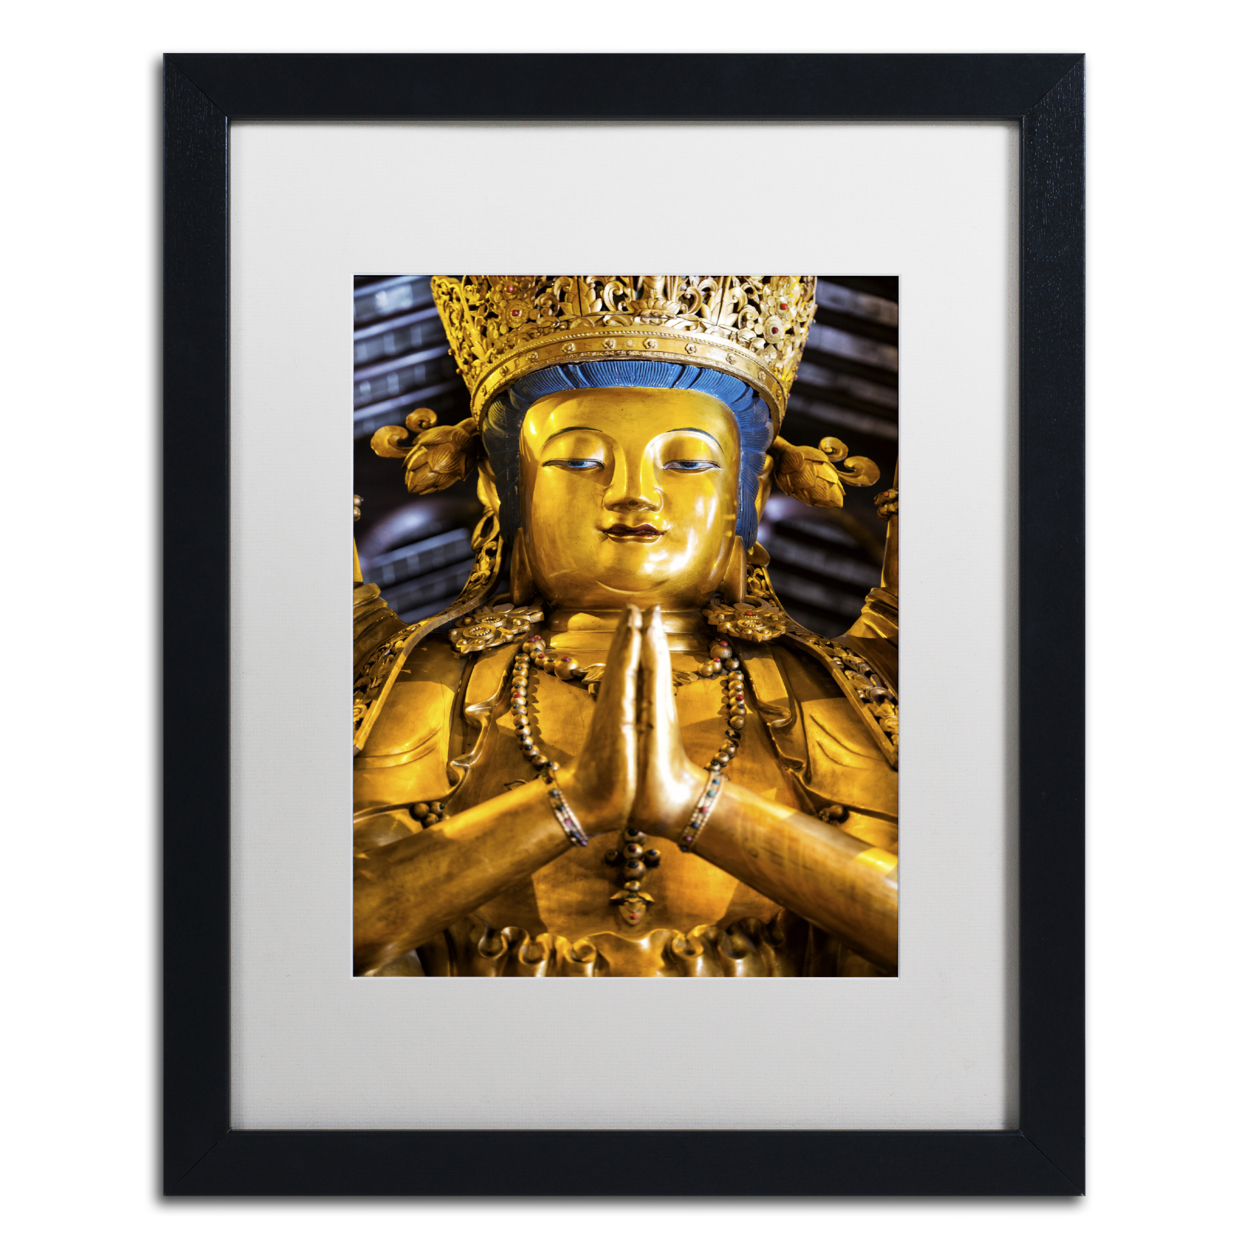 Philippe Hugonnard 'Shiva' Black Wooden Framed Art 18 X 22 Inches